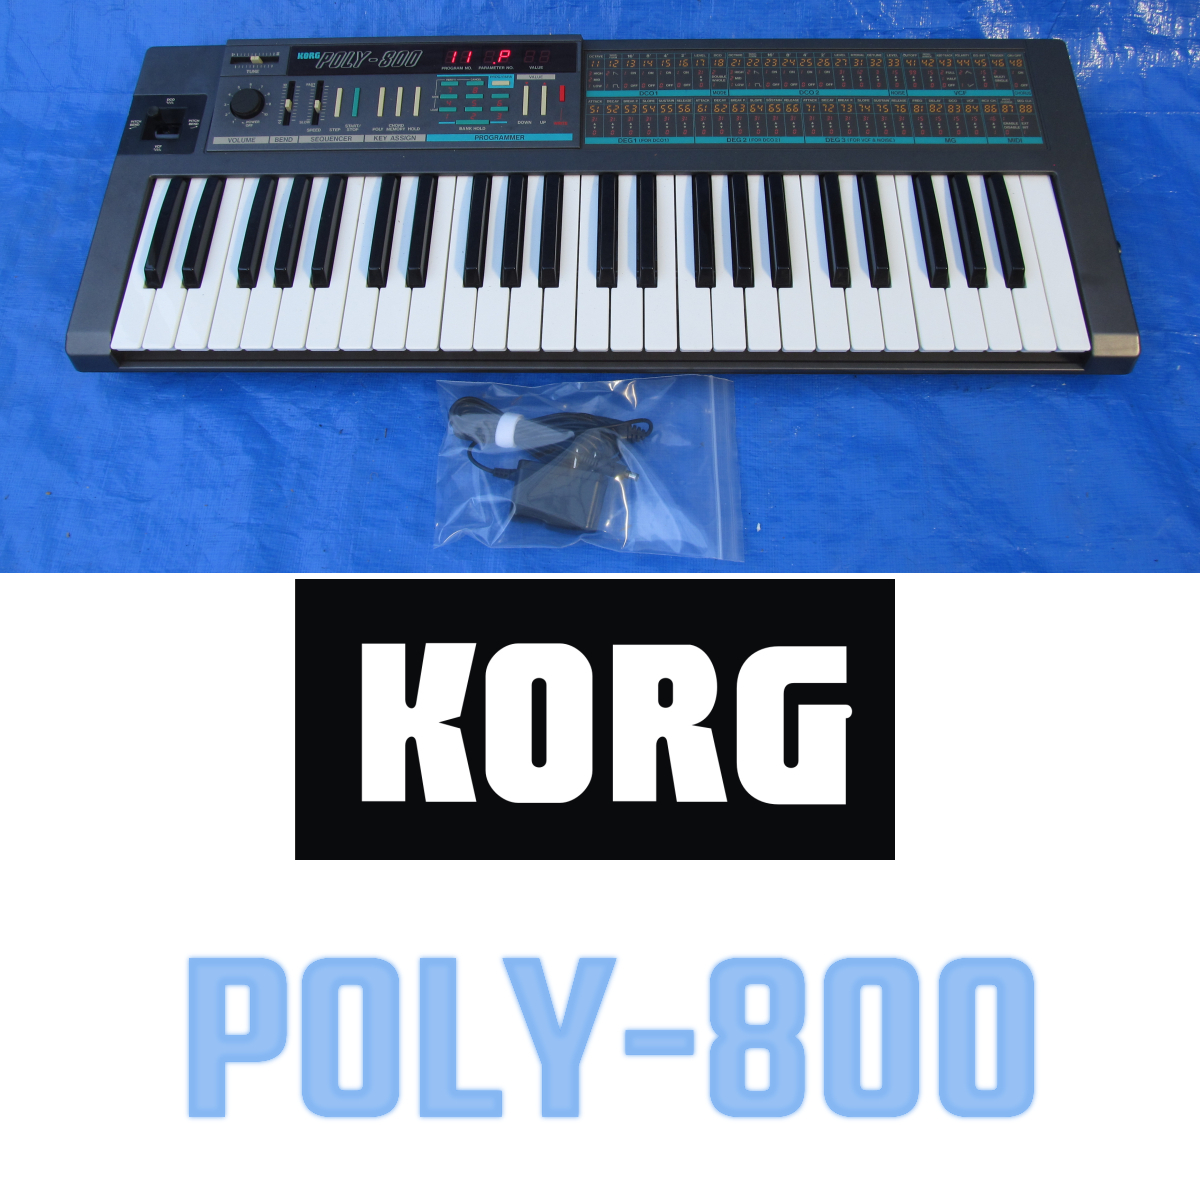 KORG/POLY-800/プログラマブルアナログポリフォニックシンセサイザー/昭和58年頃(1983年)